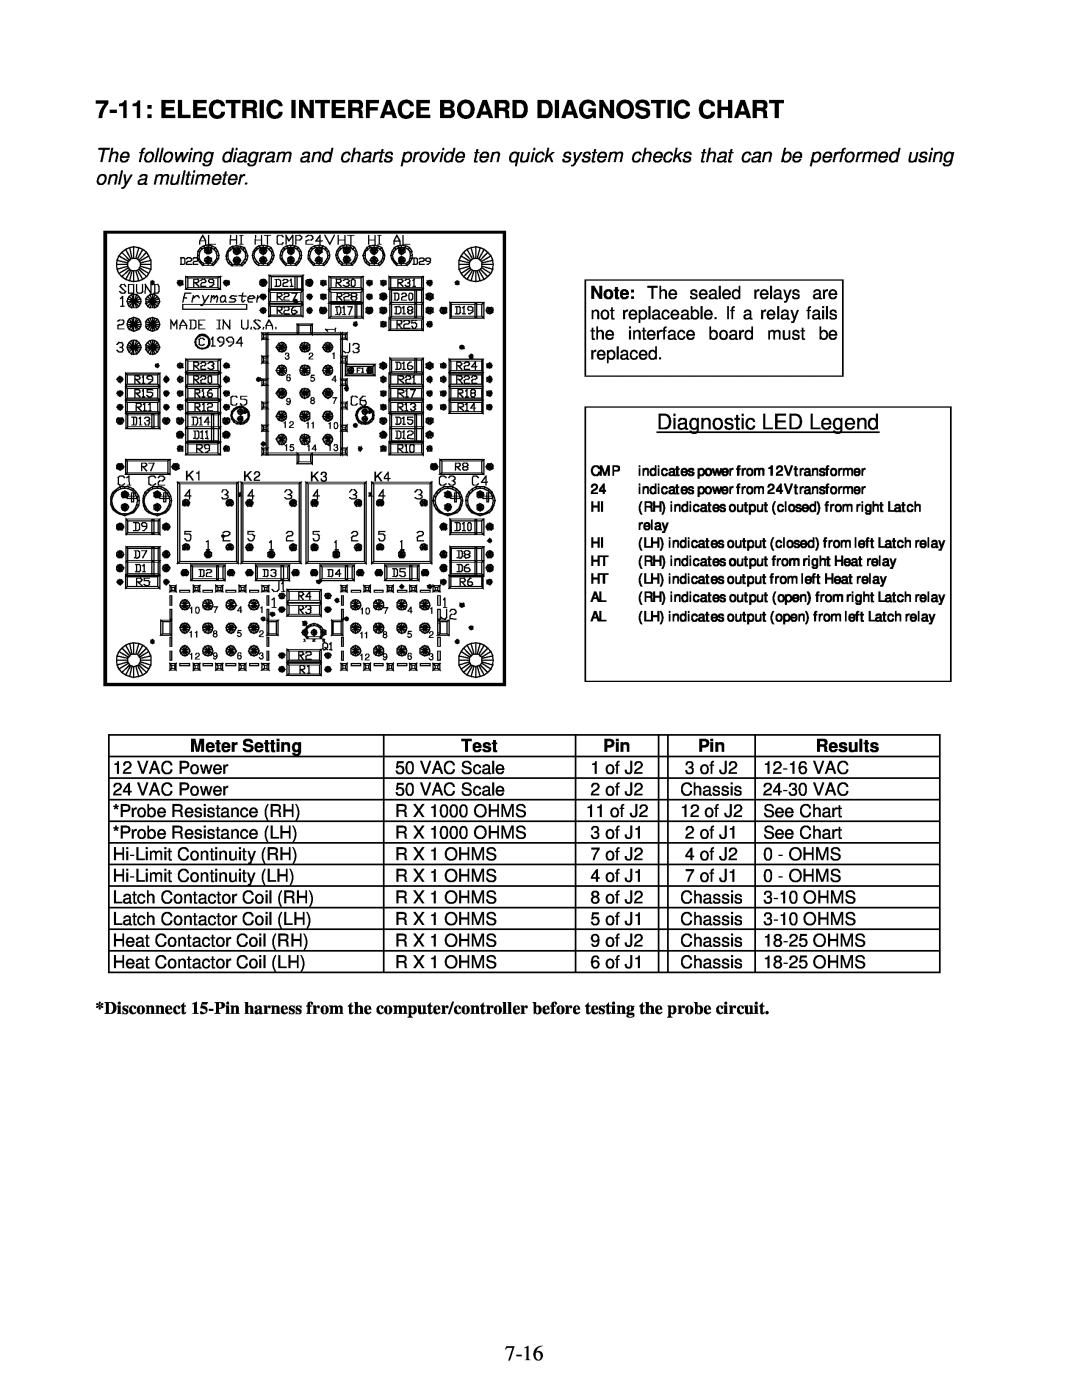 Frymaster H14 Series service manual Electric Interface Board Diagnostic Chart, Diagnostic LED Legend 